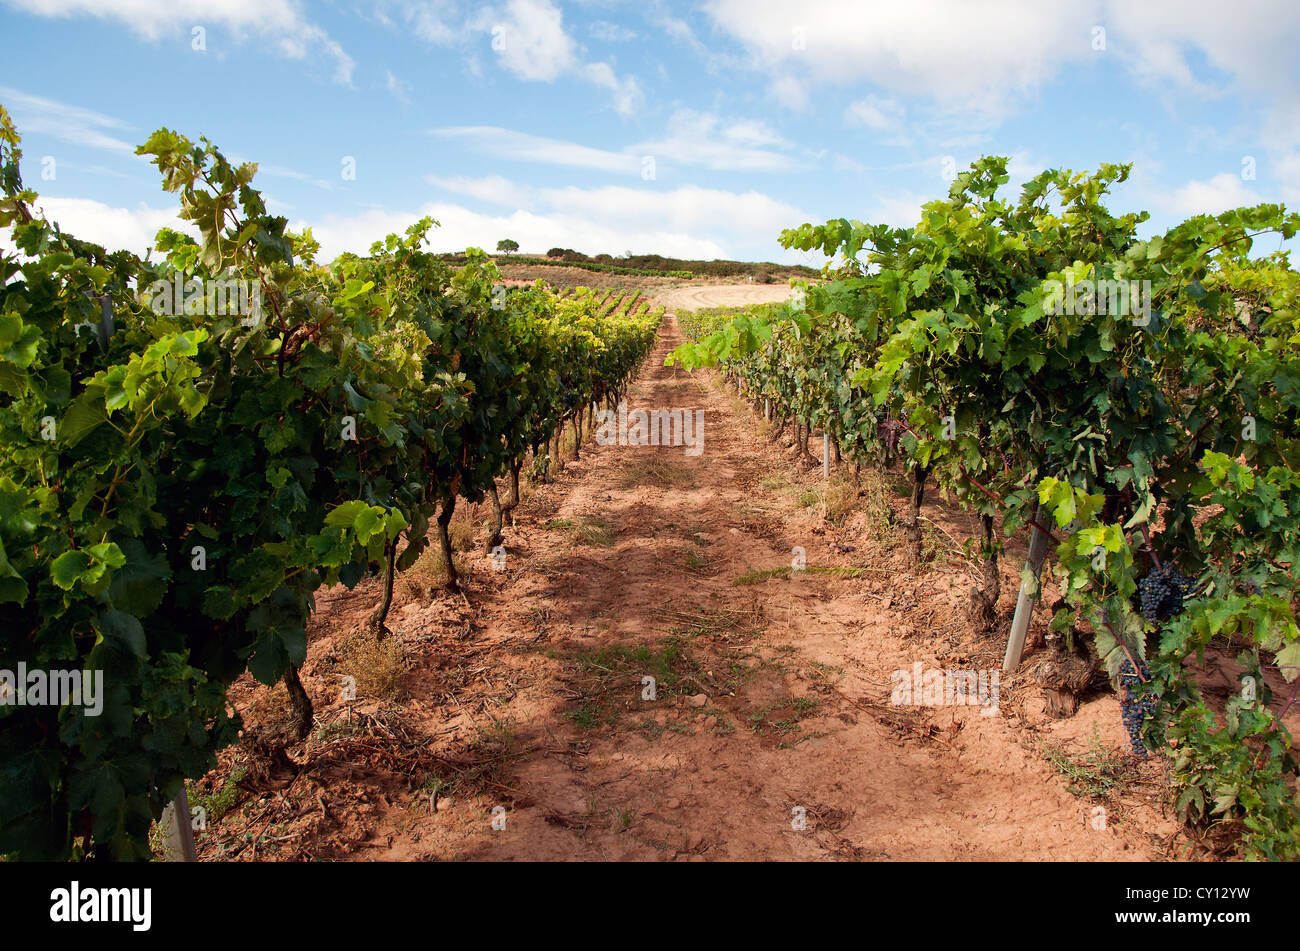 La Rioja most famous Spanish wine region Stock Photo